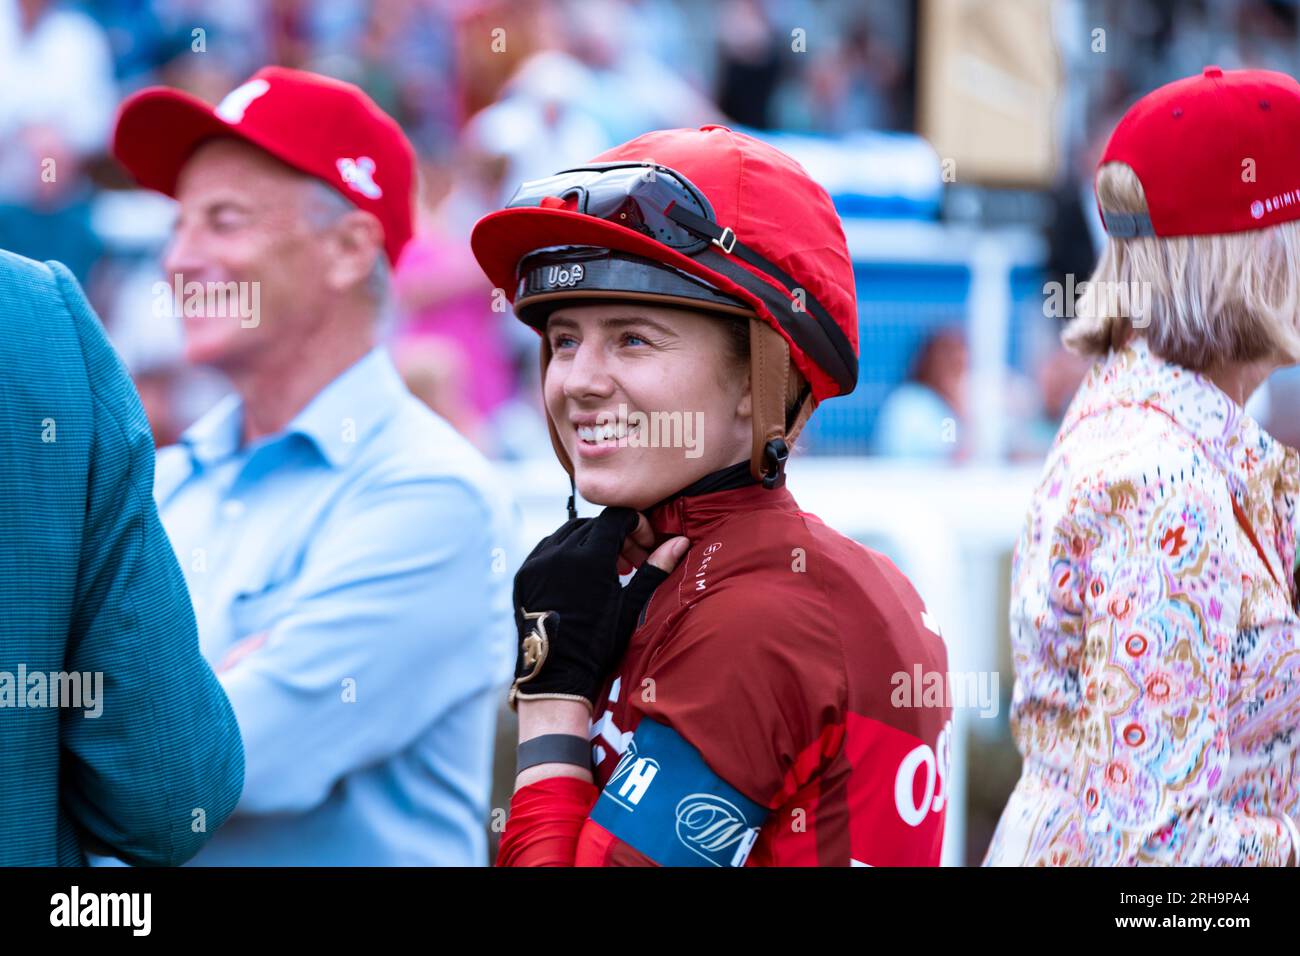 Female Jockey Saffie Osborne Smiling at Racing League Week 2 Meeting at Chepstow Racecourse. Stock Photo